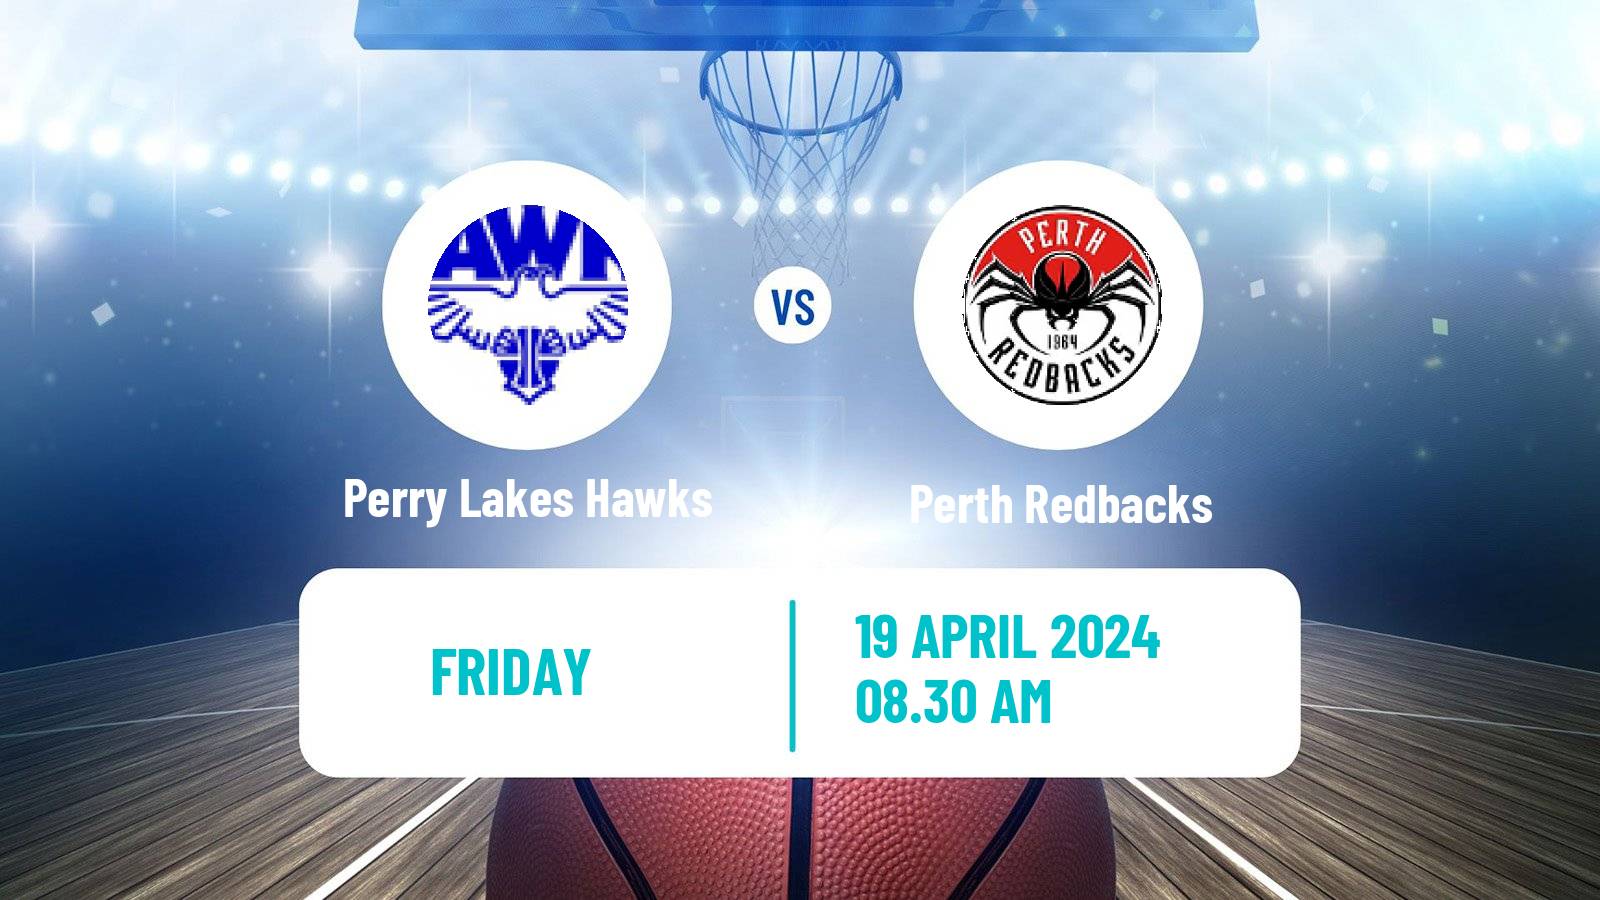 Basketball Australian NBL1 West Perry Lakes Hawks - Perth Redbacks